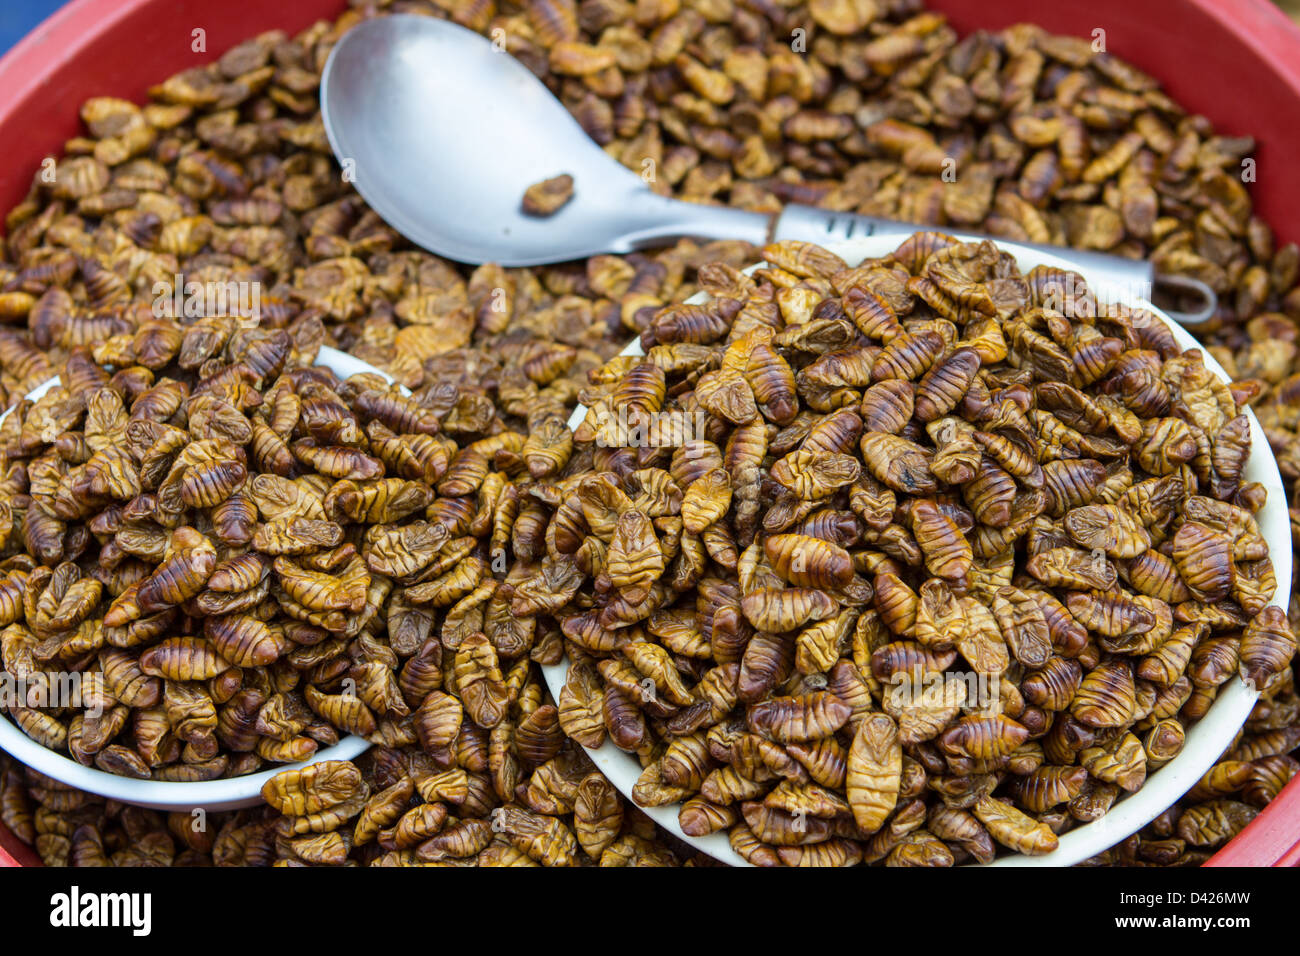 Silkworm larvae in honey at Jagalchi fish market, Busan, South Korea Stock Photo